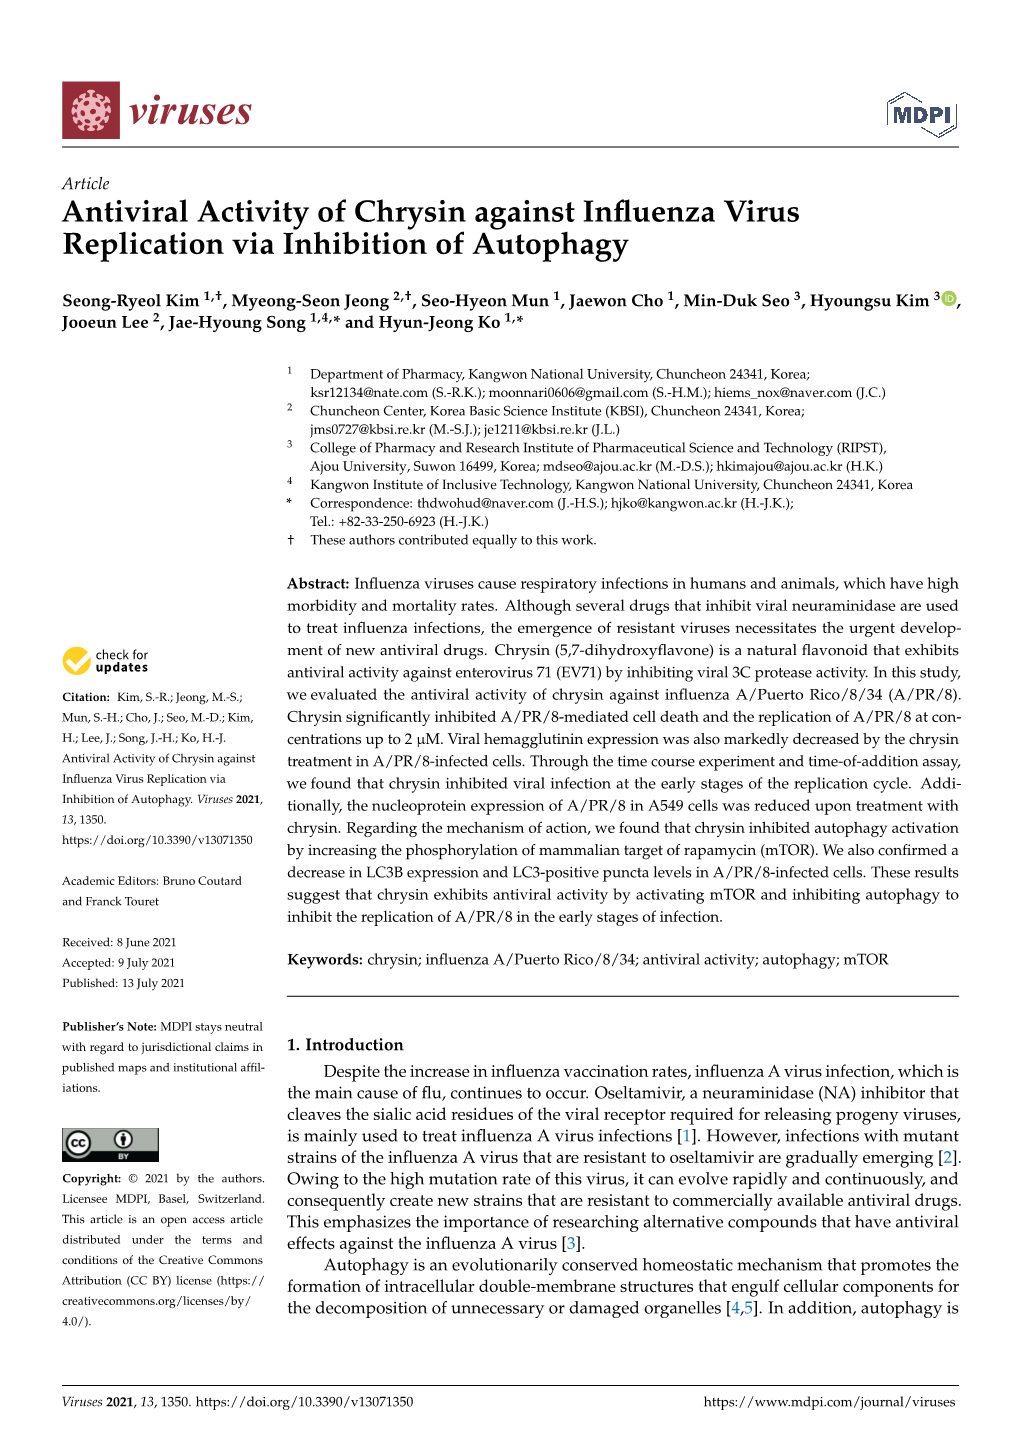 Antiviral Activity of Chrysin Against Influenza Virus Replication Via